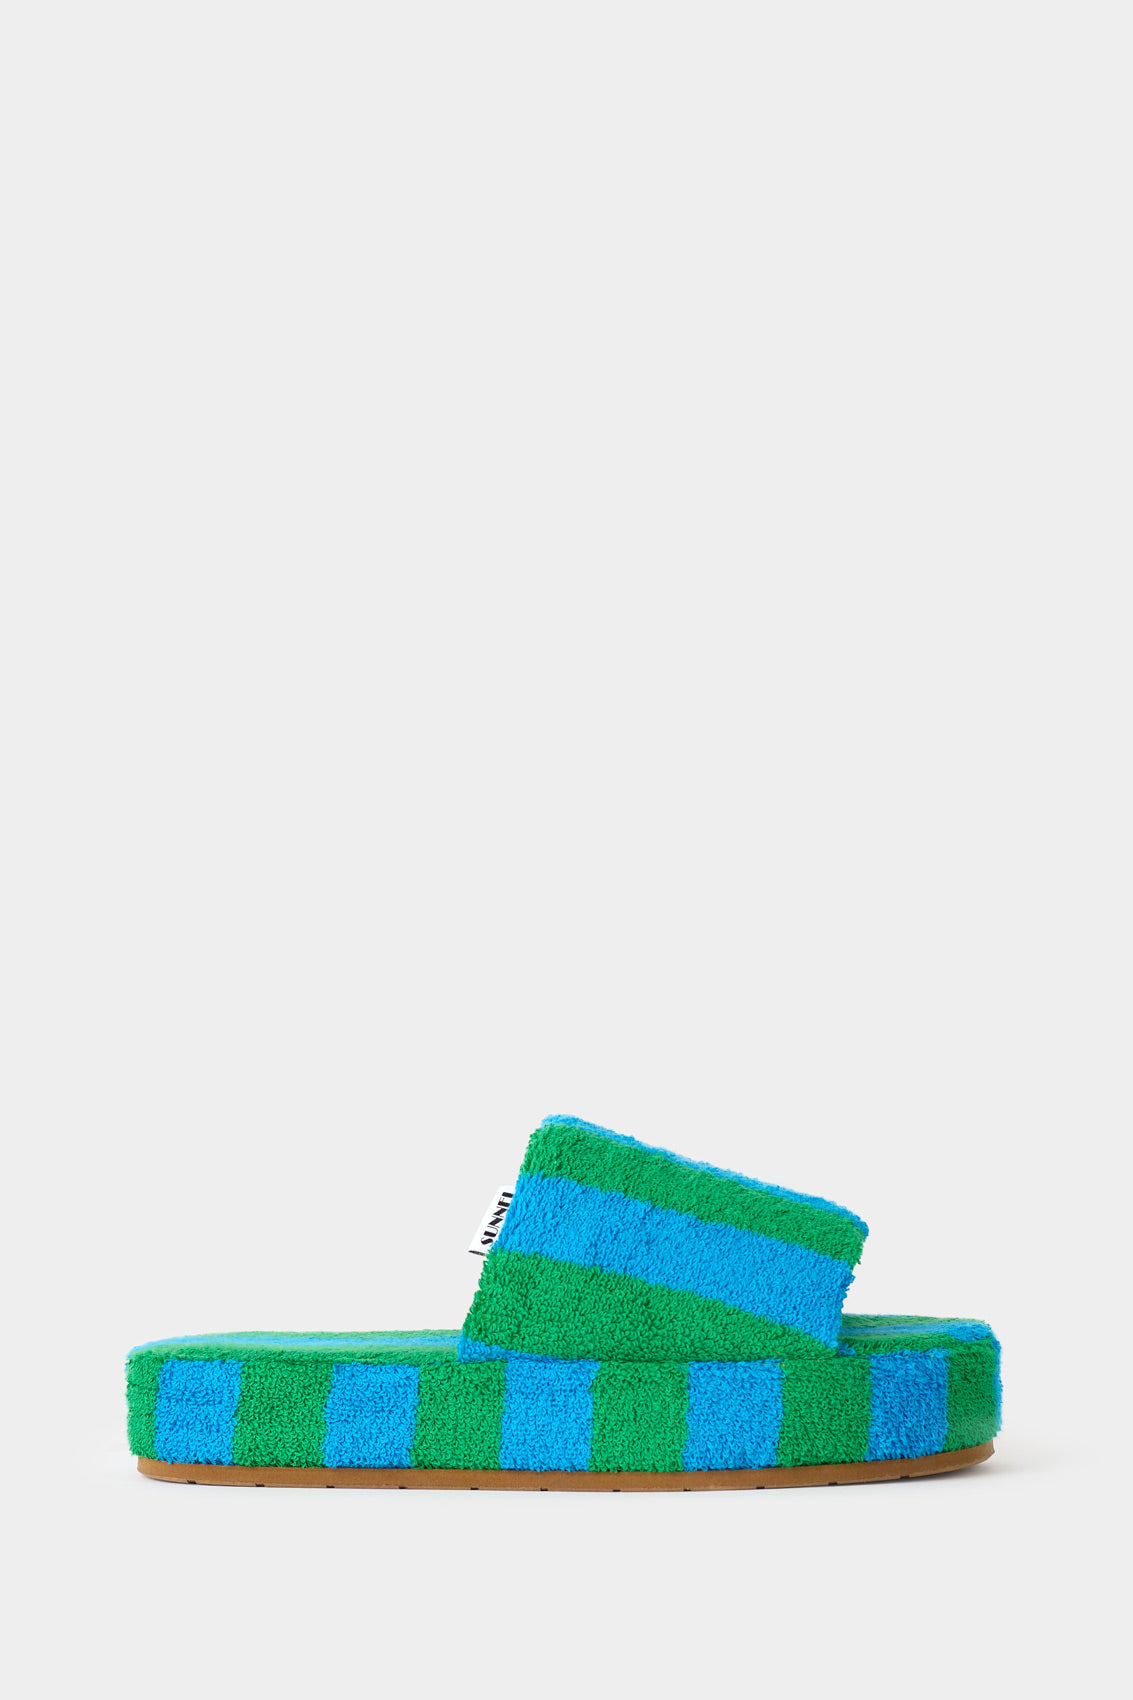 TOWEL DREAMY SLIDERS / azure & green stripes